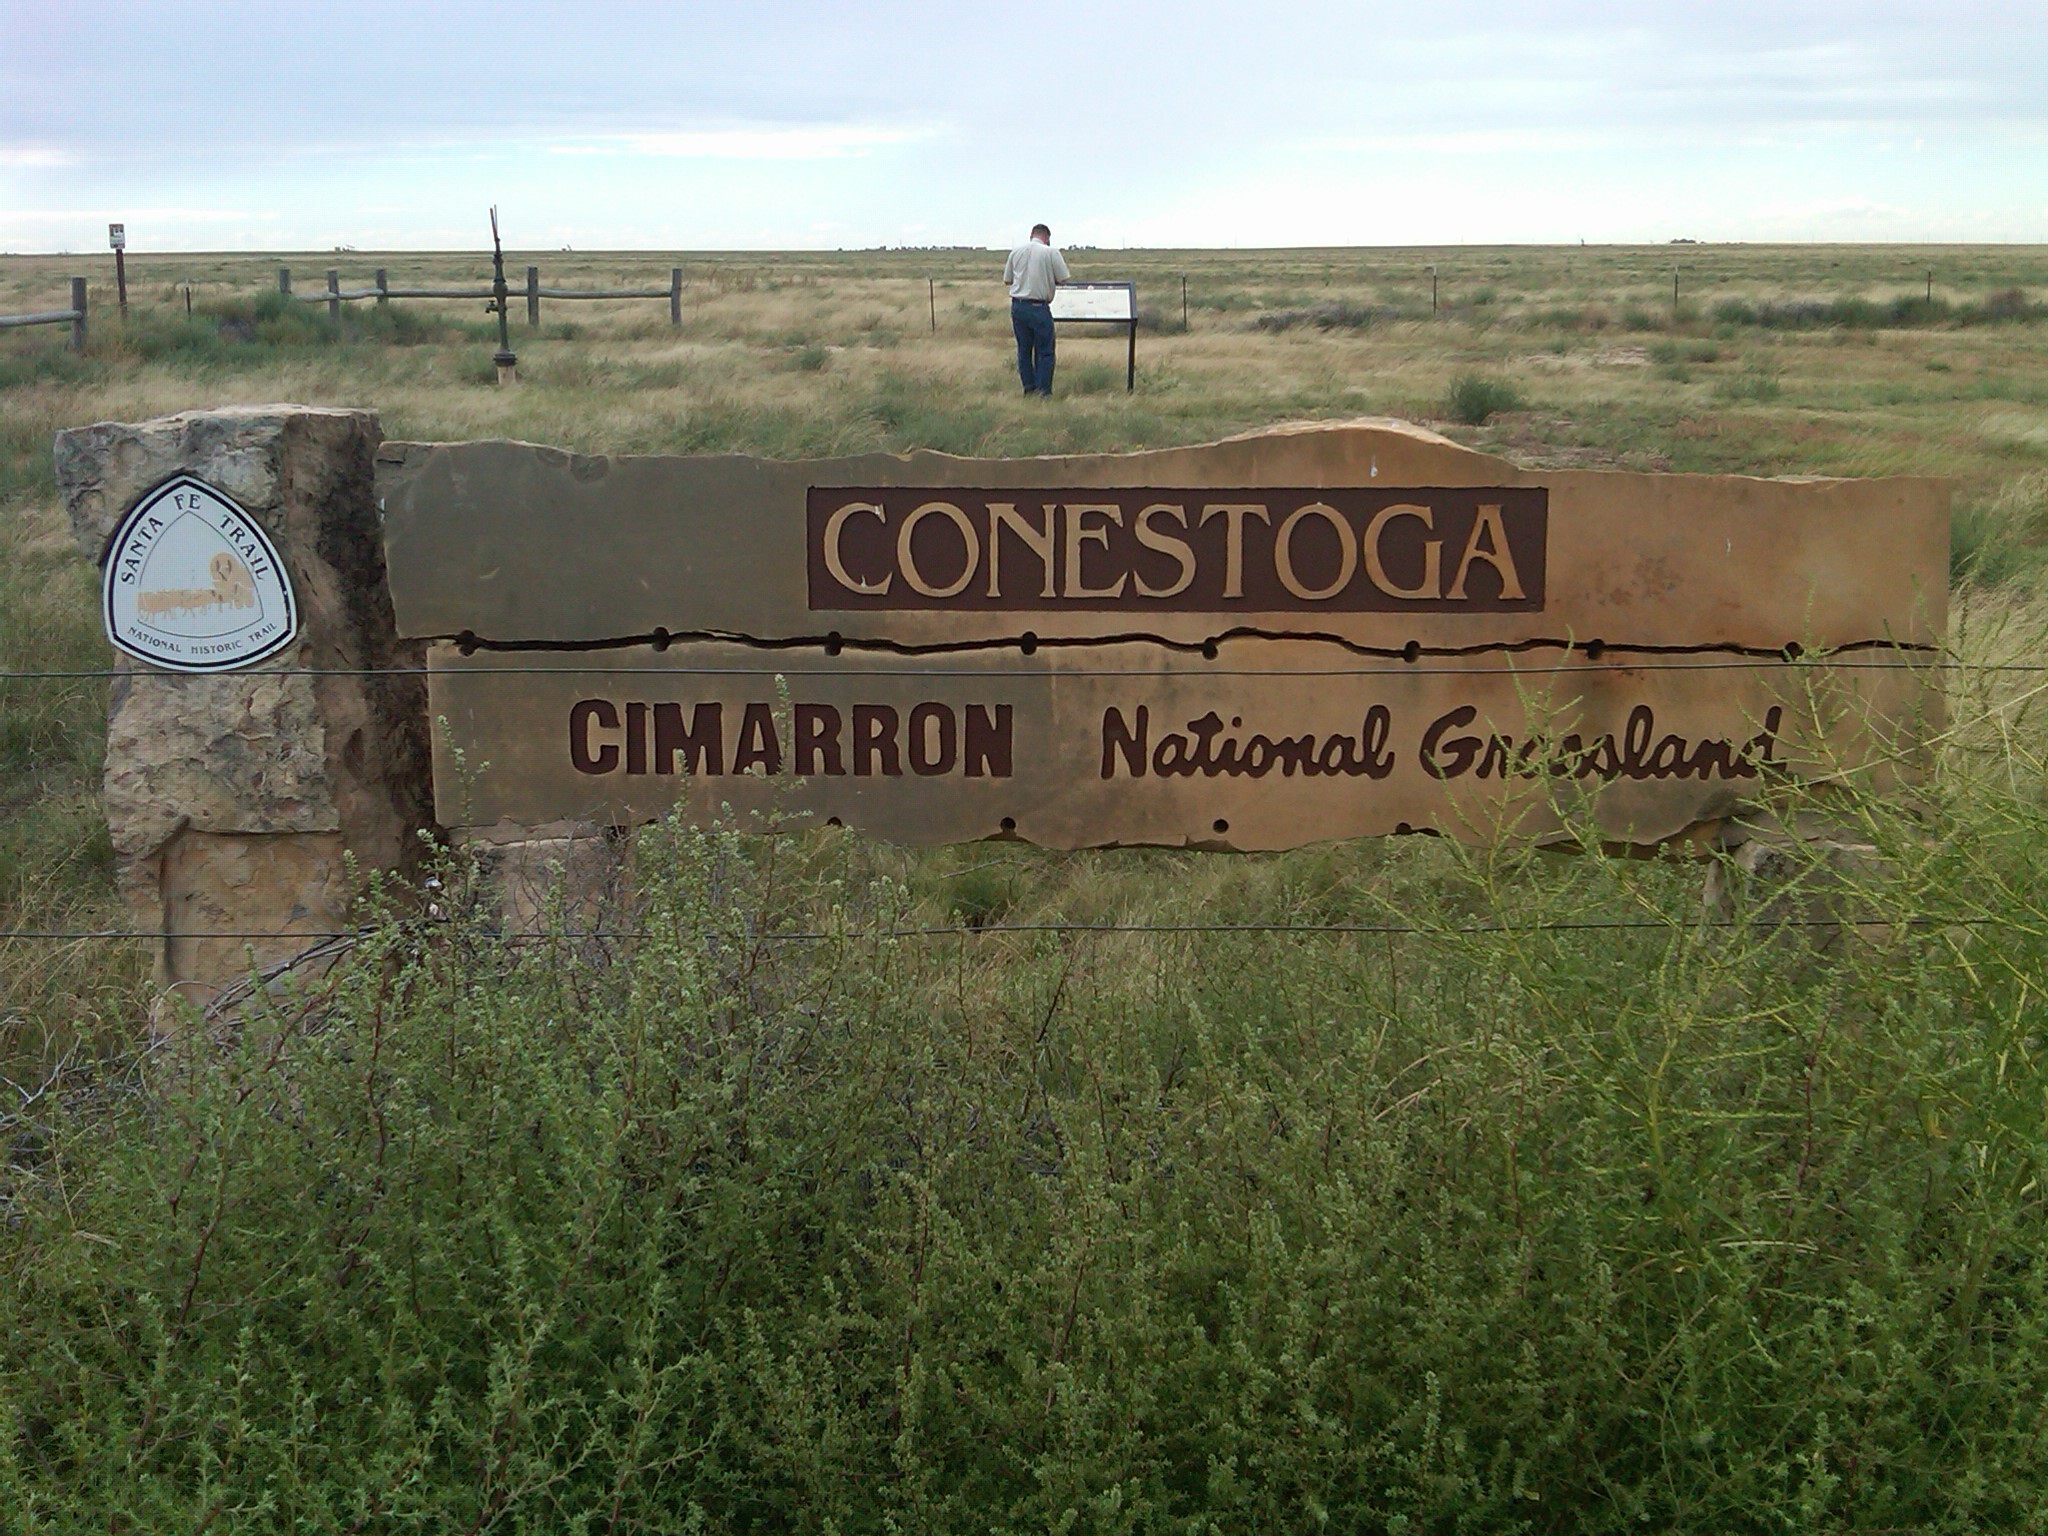 Conestoga, Cimarron National Grassland stone monument